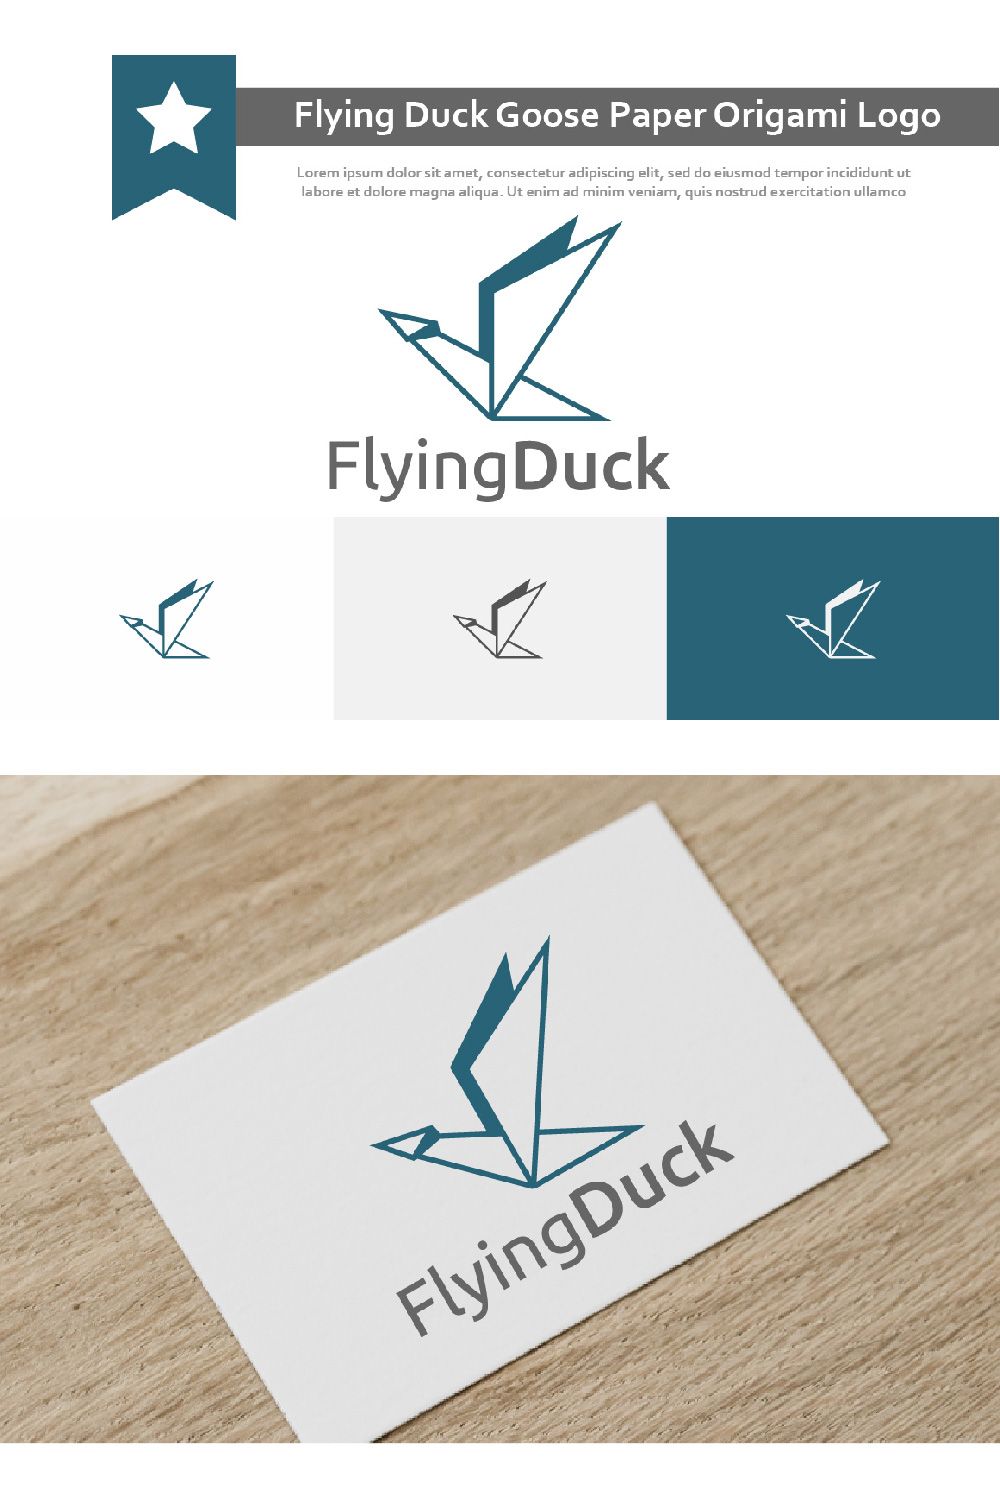 Flying Duck Goose Paper Origami Style Line Logo pinterest image.